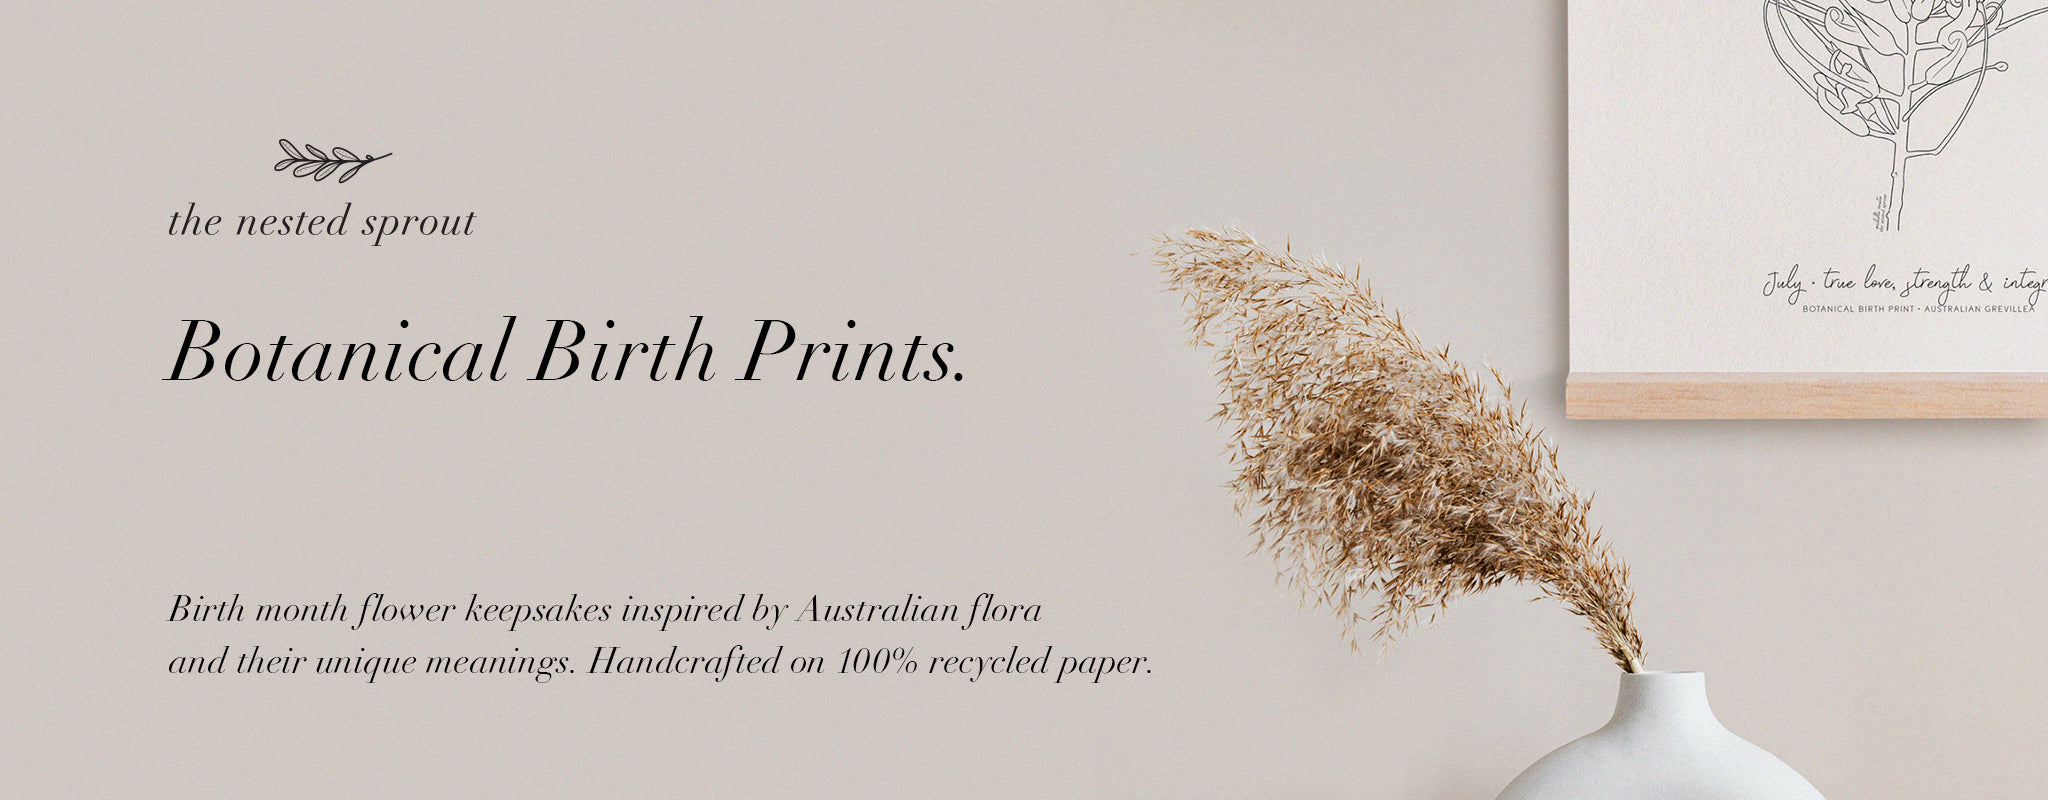 Botanical Birth Prints.